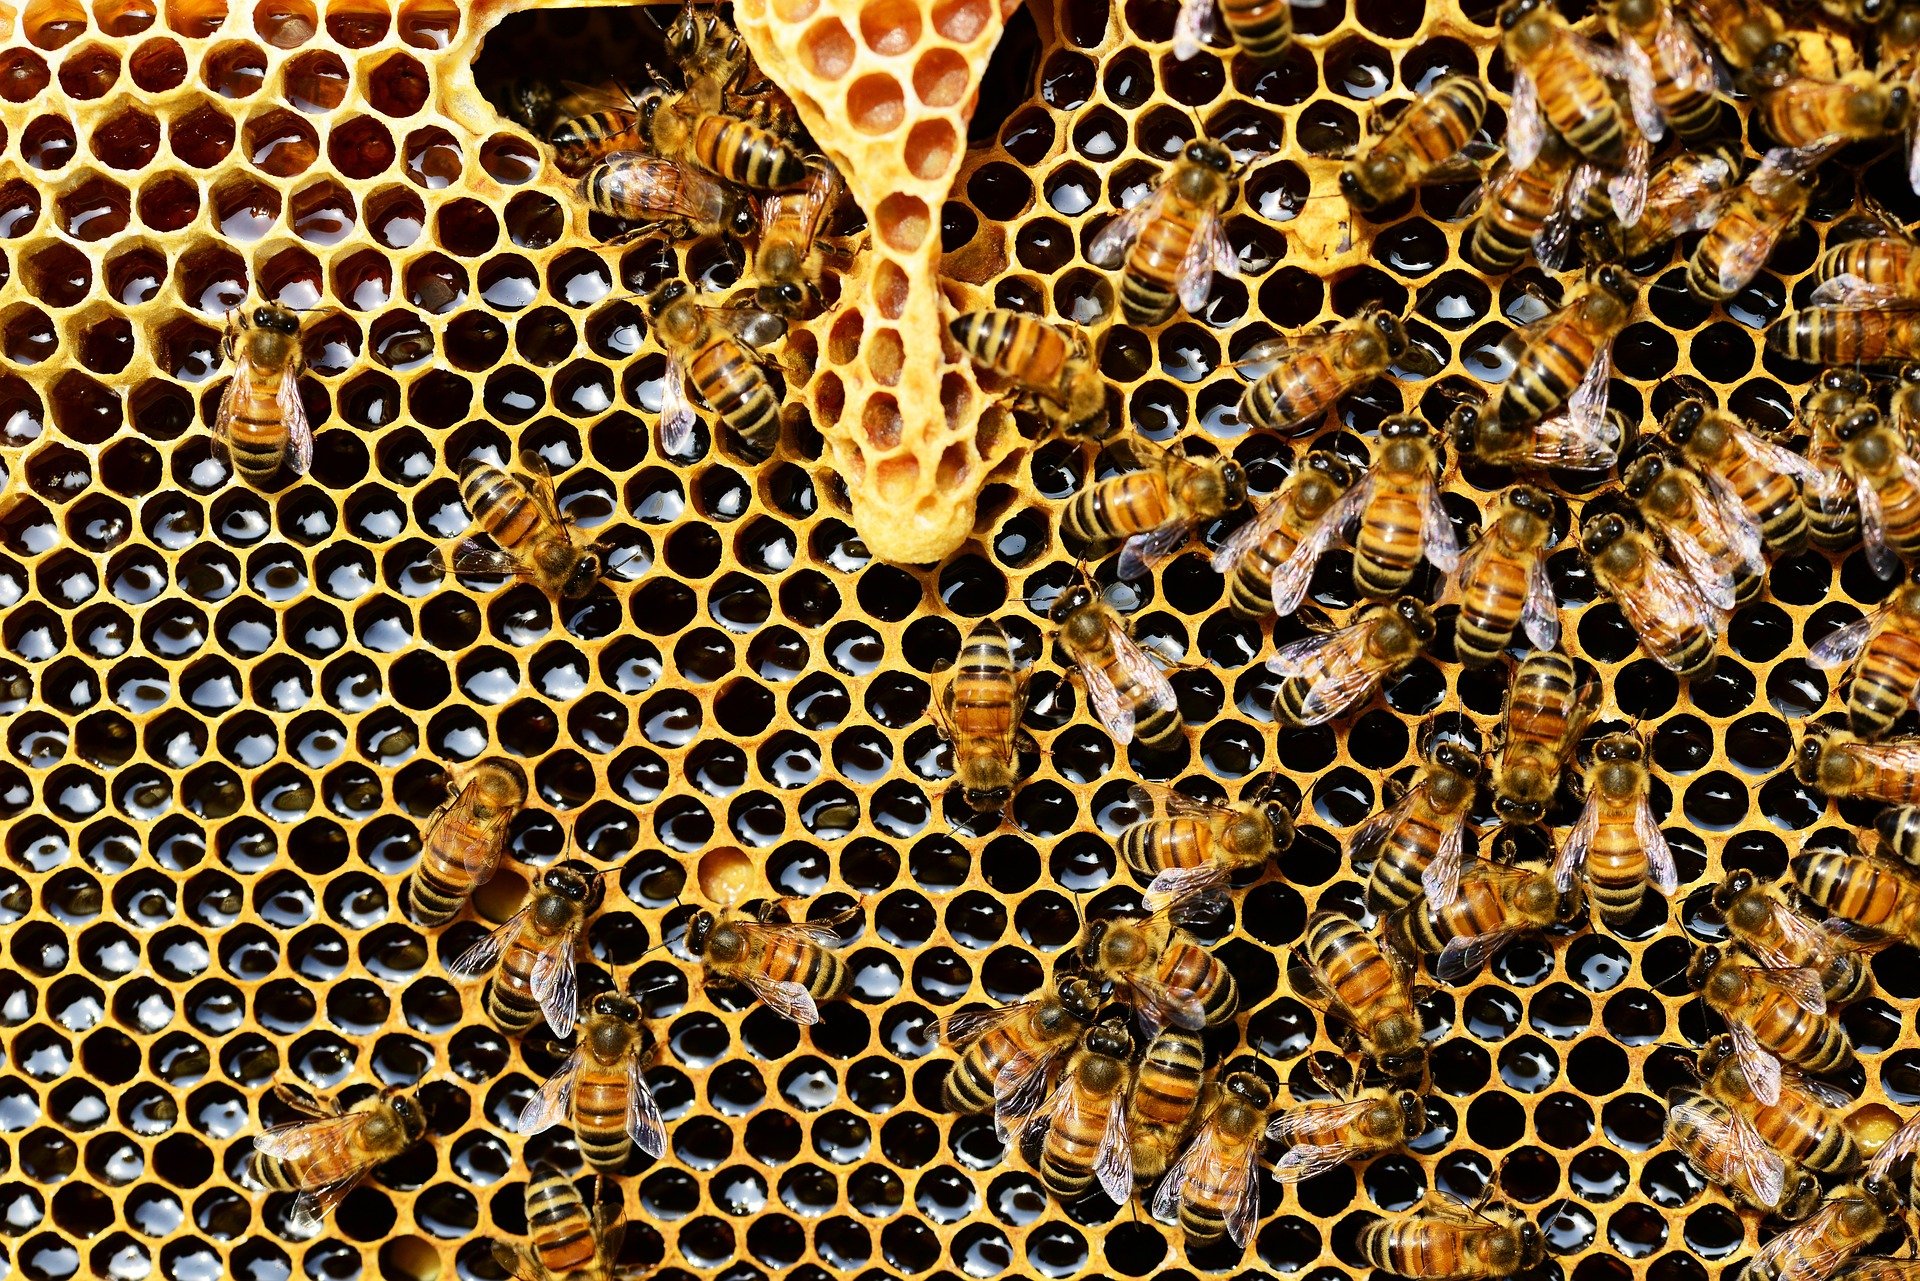 Honey Bees 337695 1920